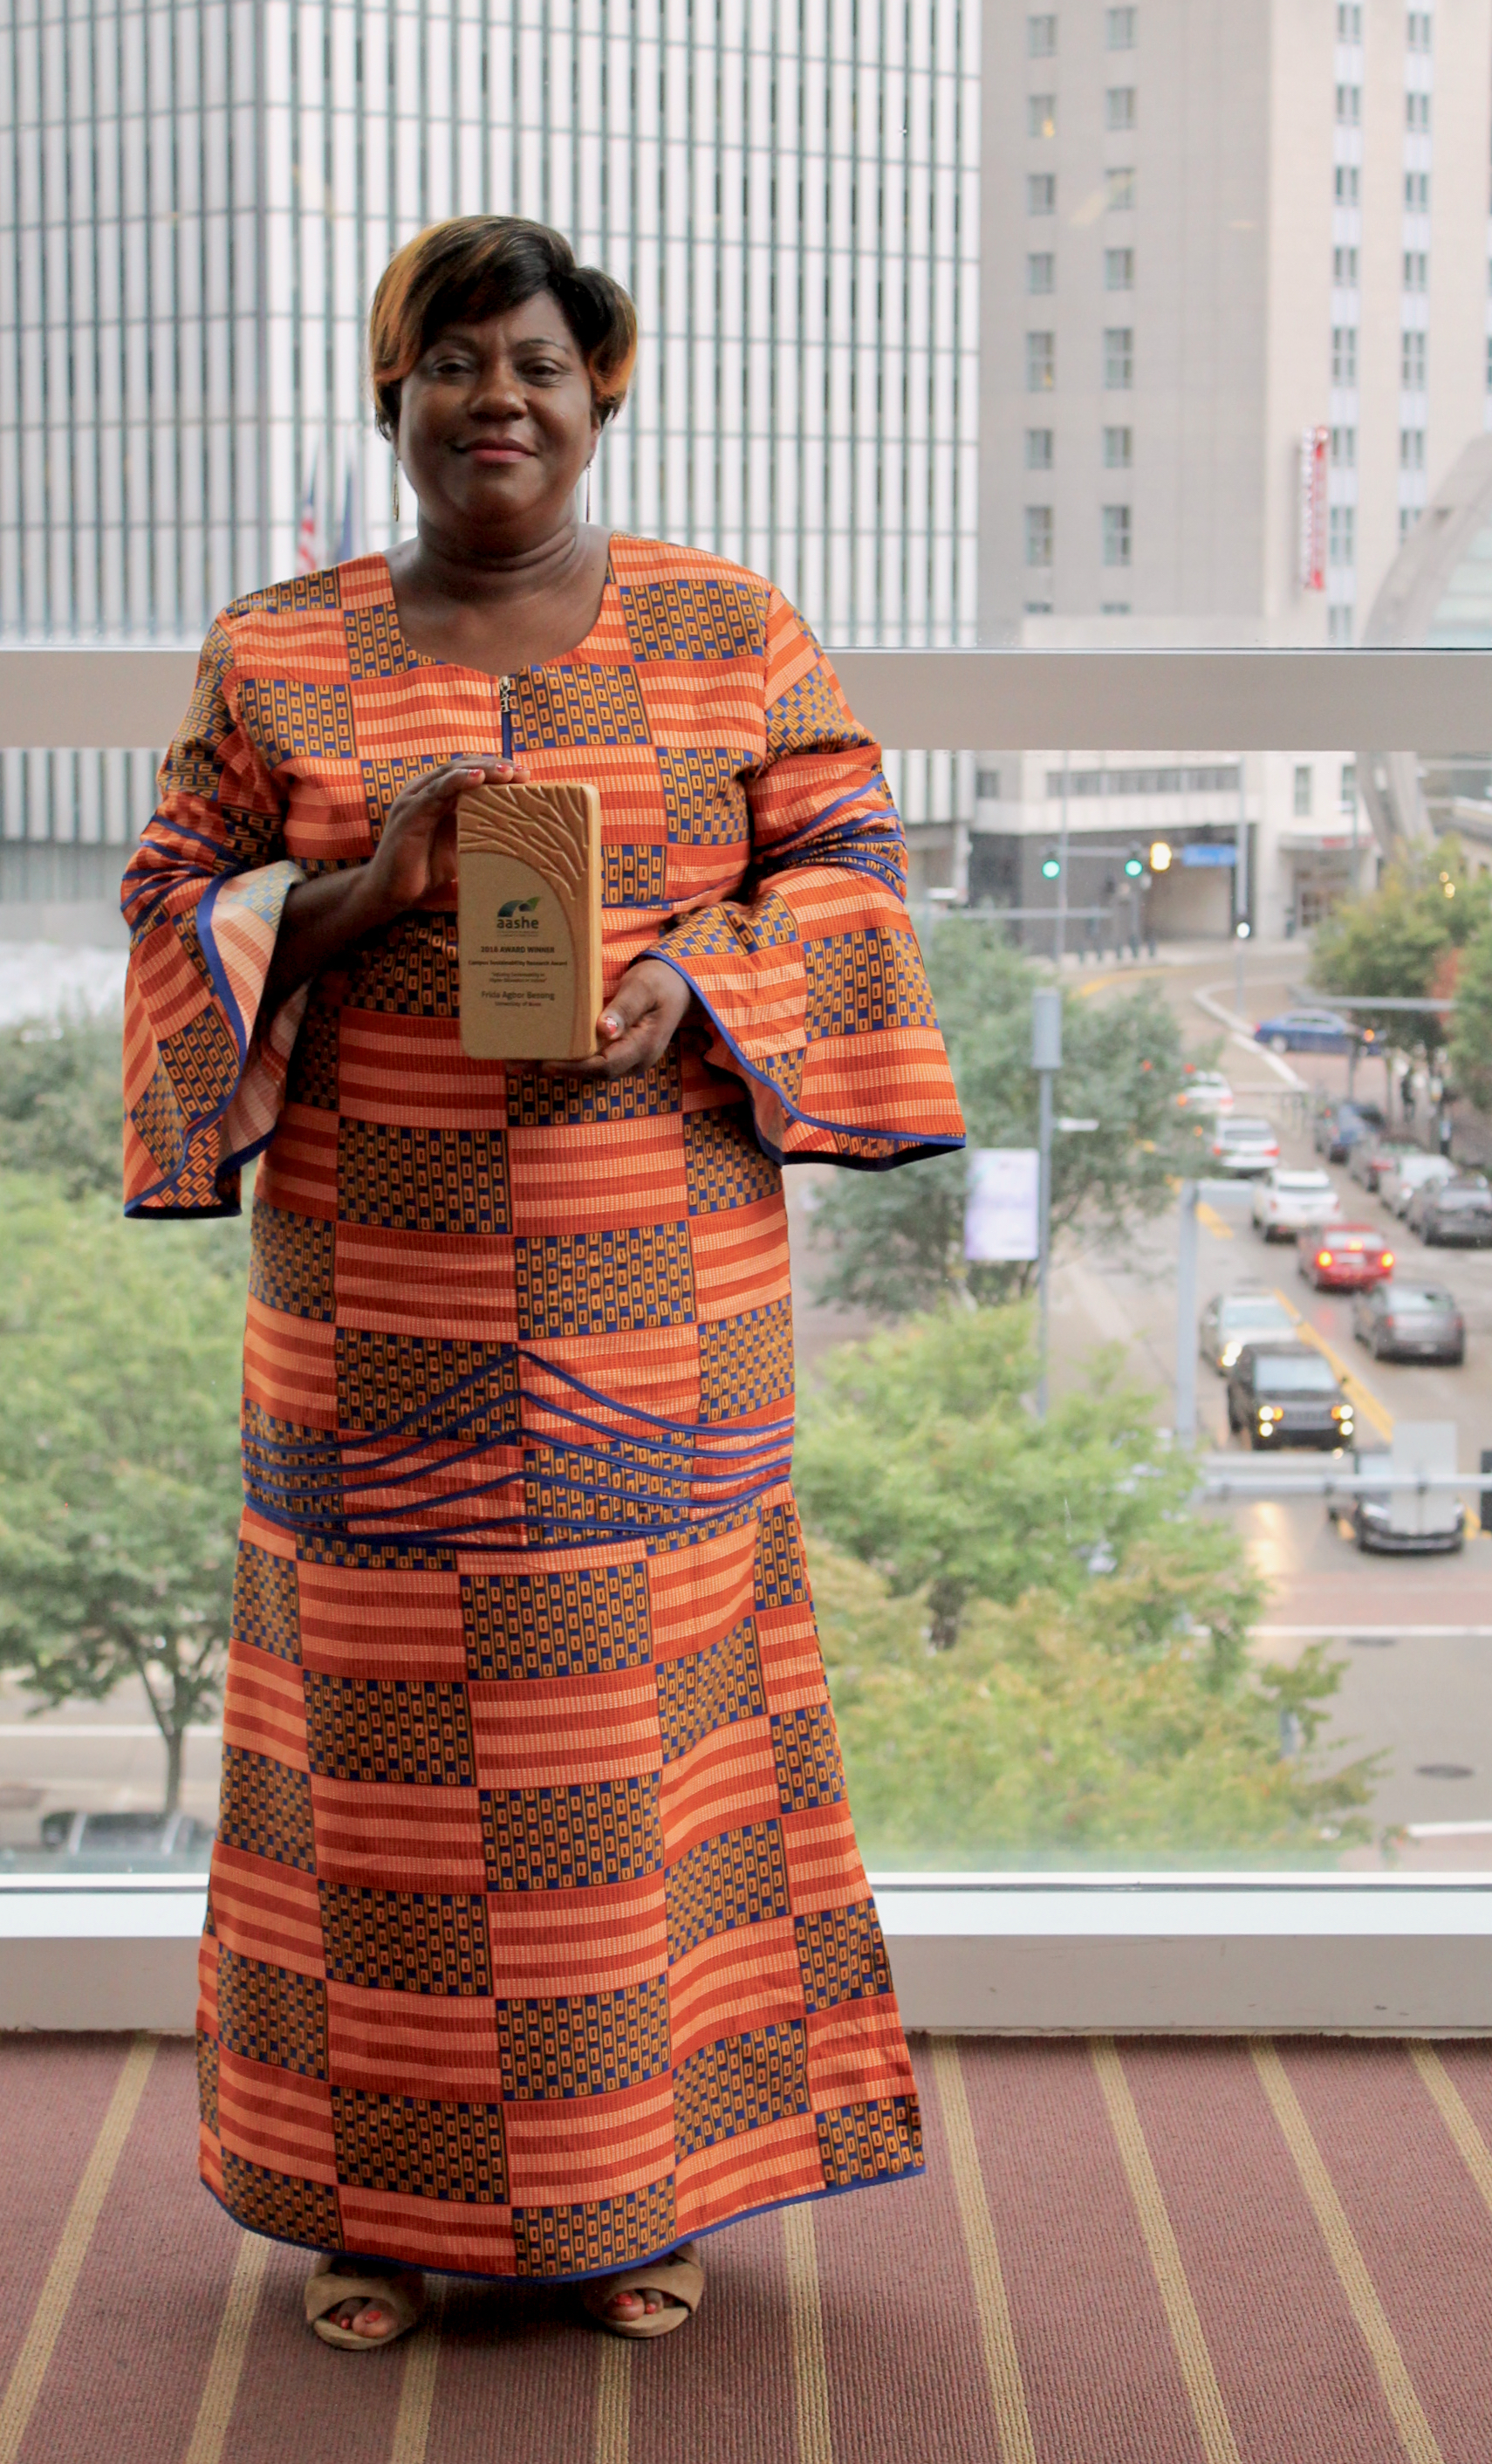 Frida Agbor Besong 2018 AAShE Sustainability Award Winner